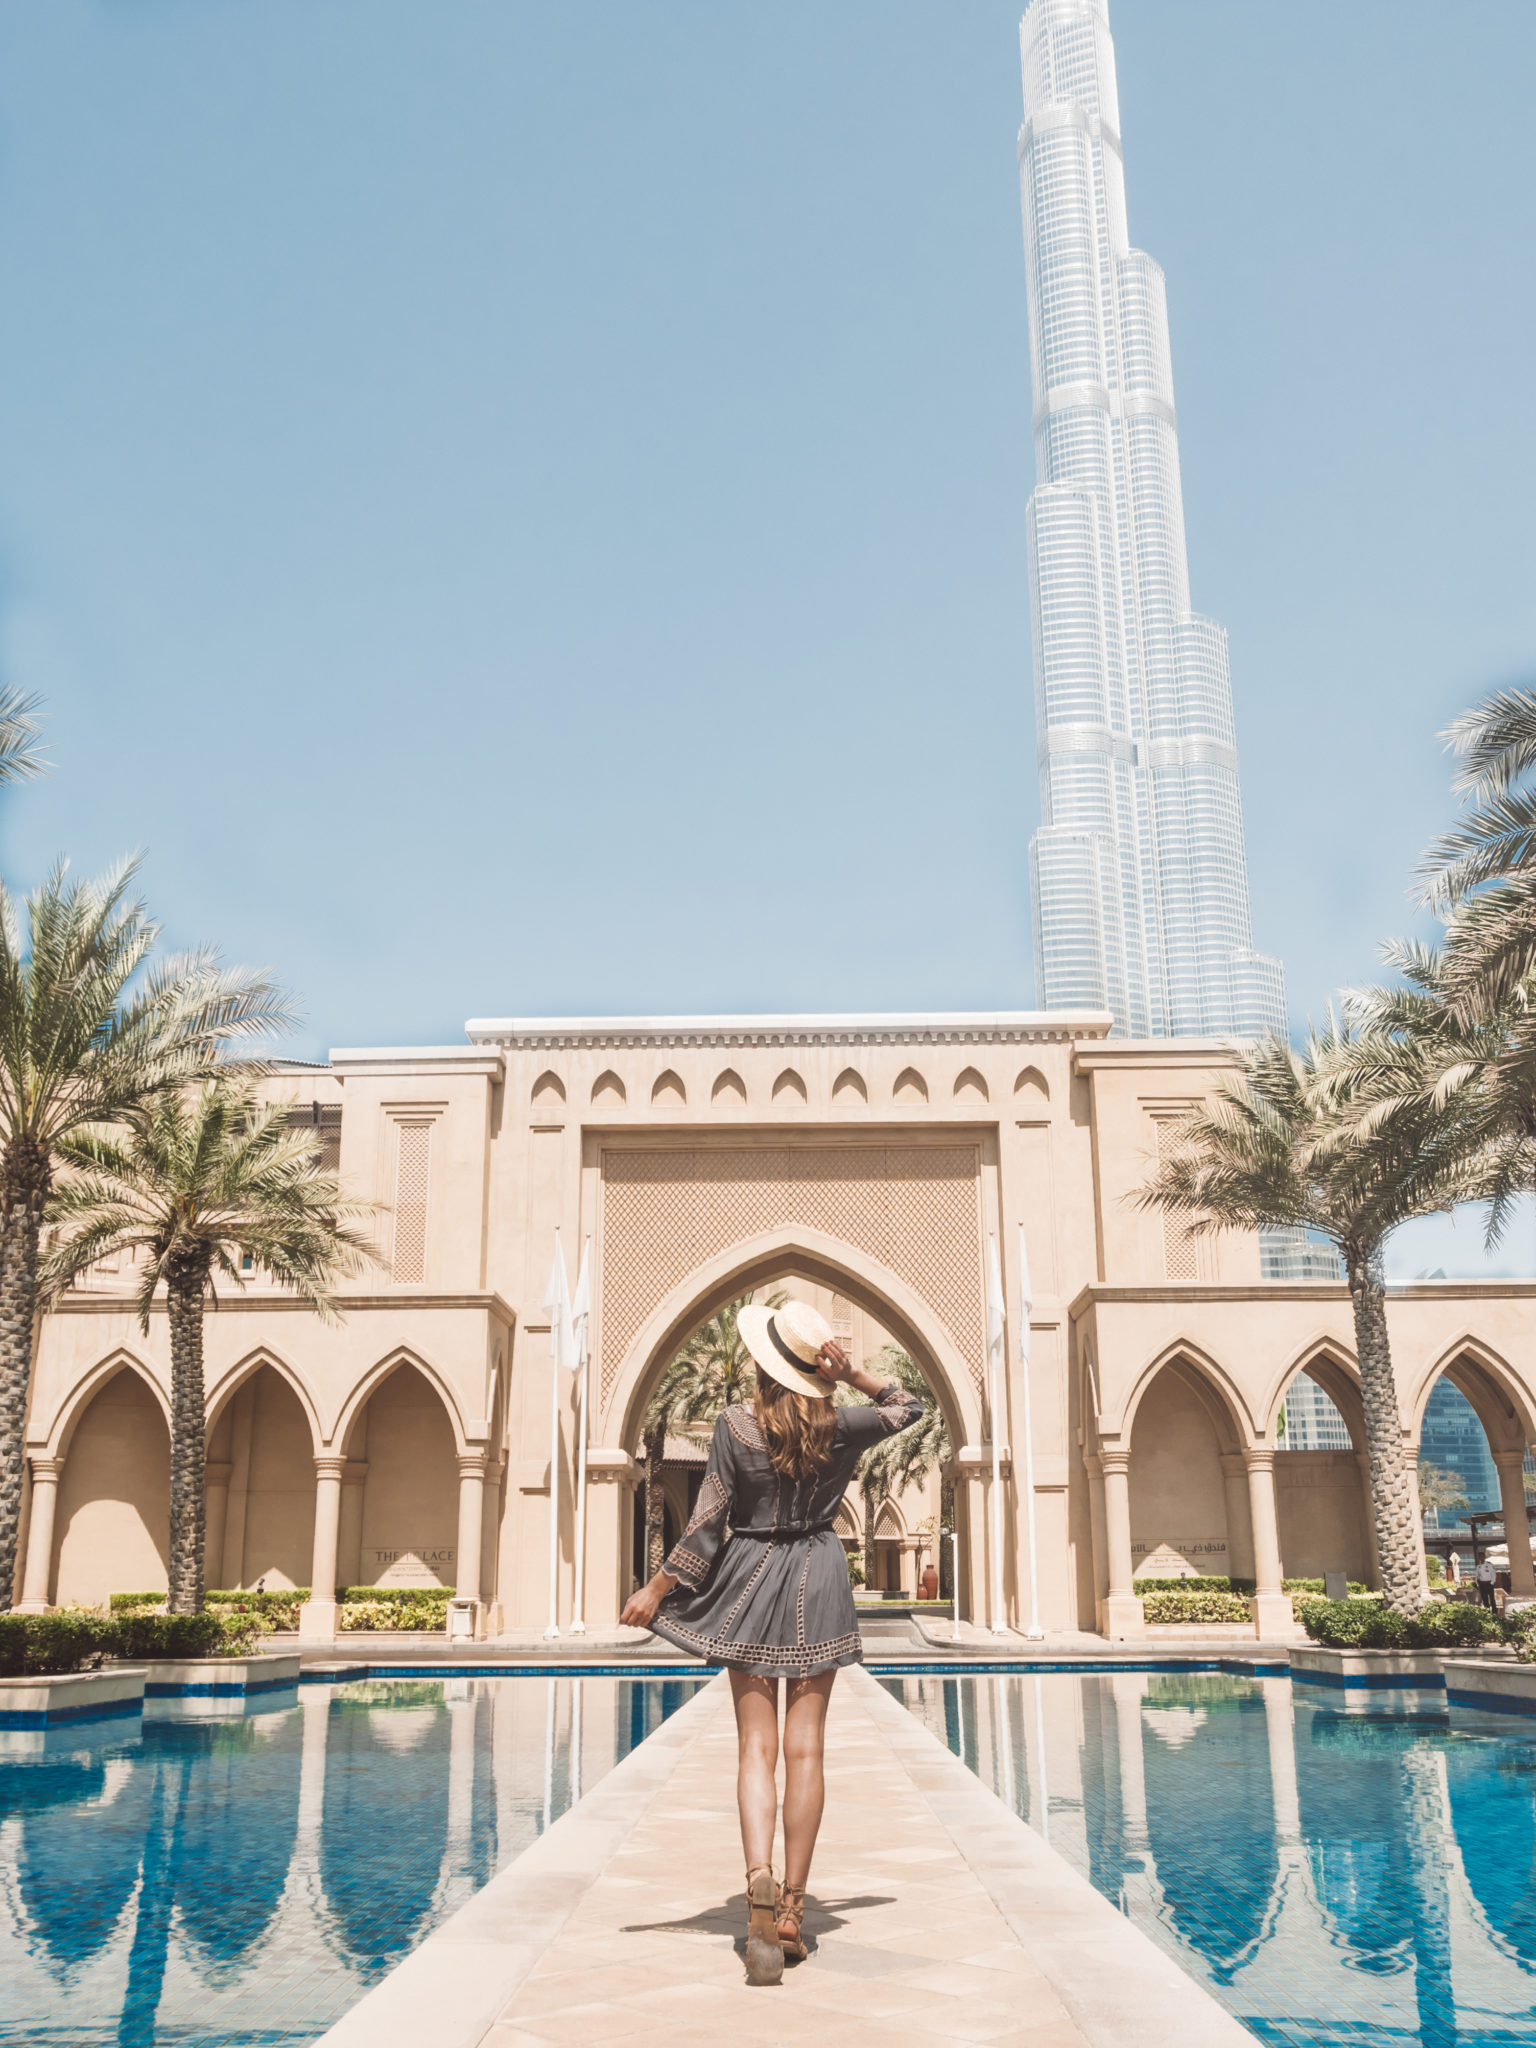 Dubai's Wonder Last World